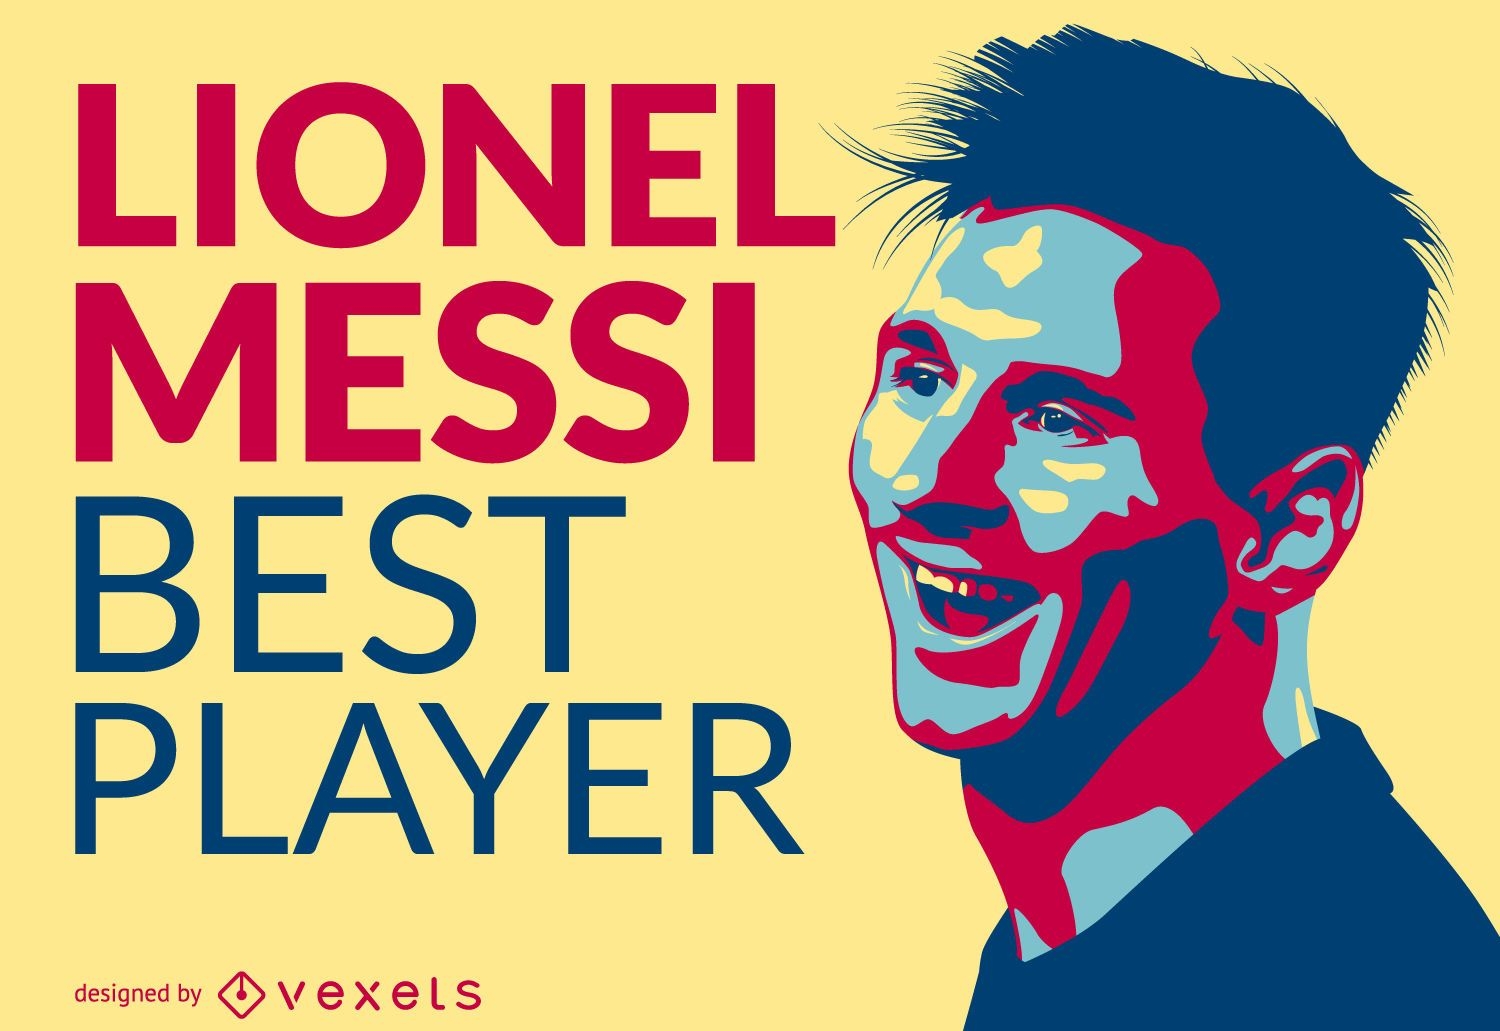 Lionel Messi best player illustration